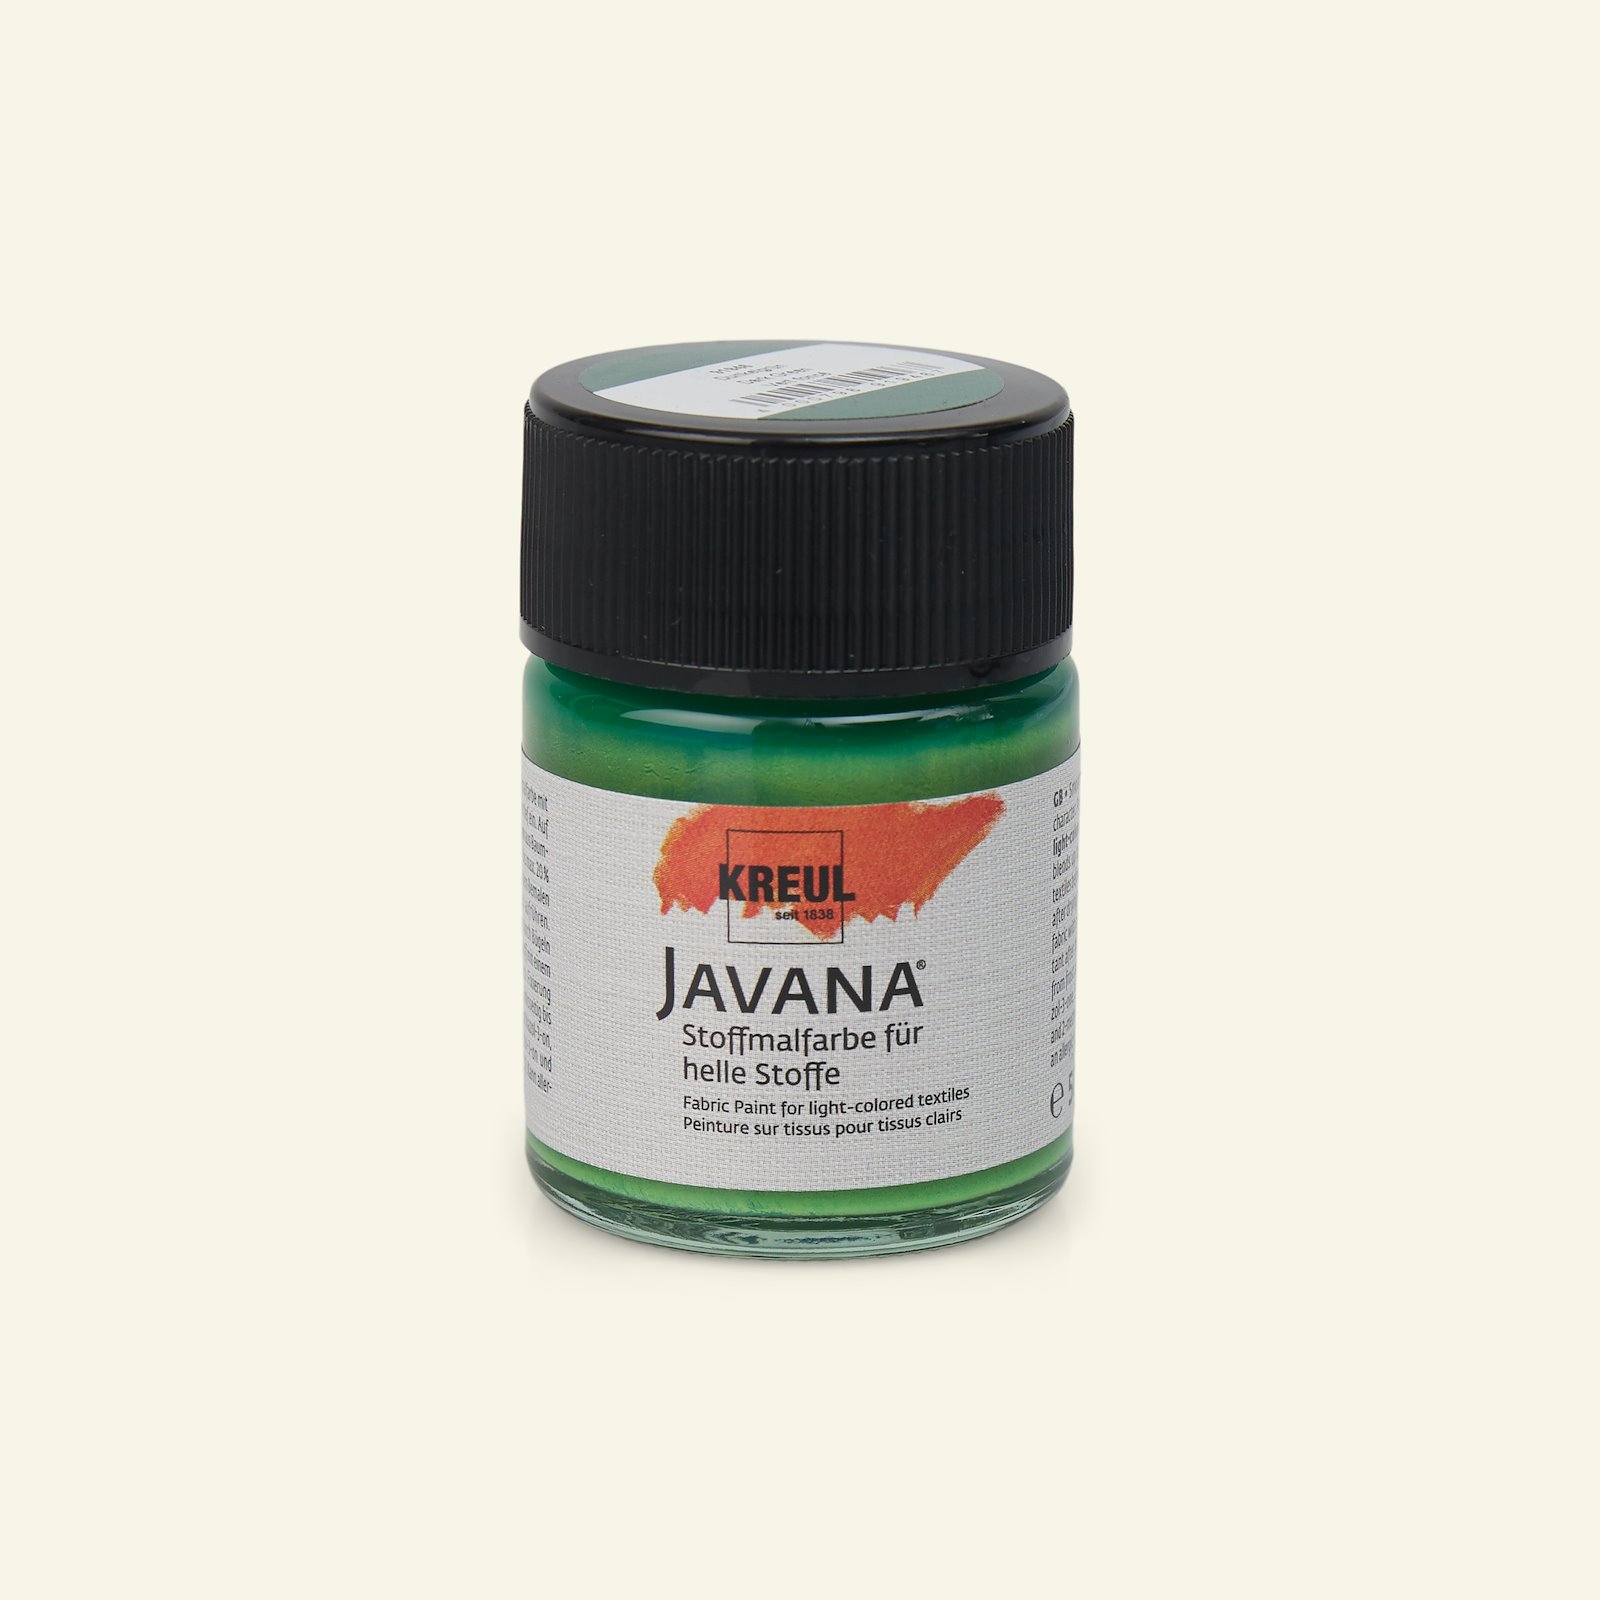 Javana tekstilfarve mørkegrøn 50ml 29616_pack_b